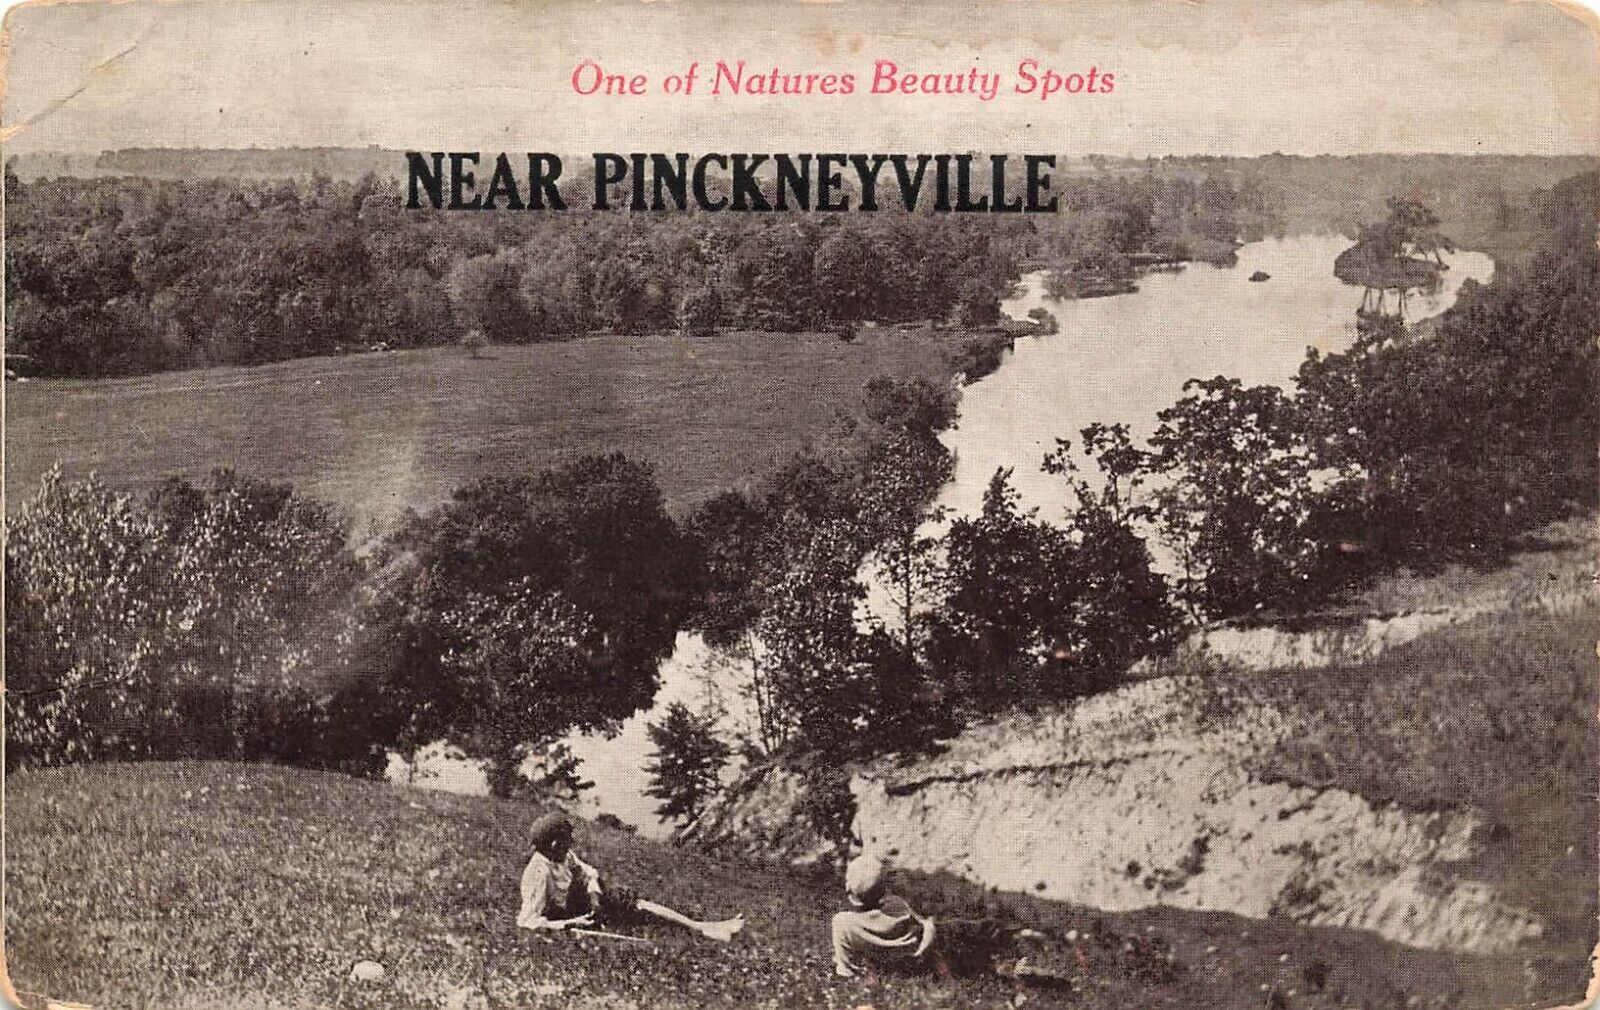 1914 ILLINOIS PHOTO POSTCARD: VIEW OF A BEAUTY SPOTS IN PINCKNEYVILLE, IL